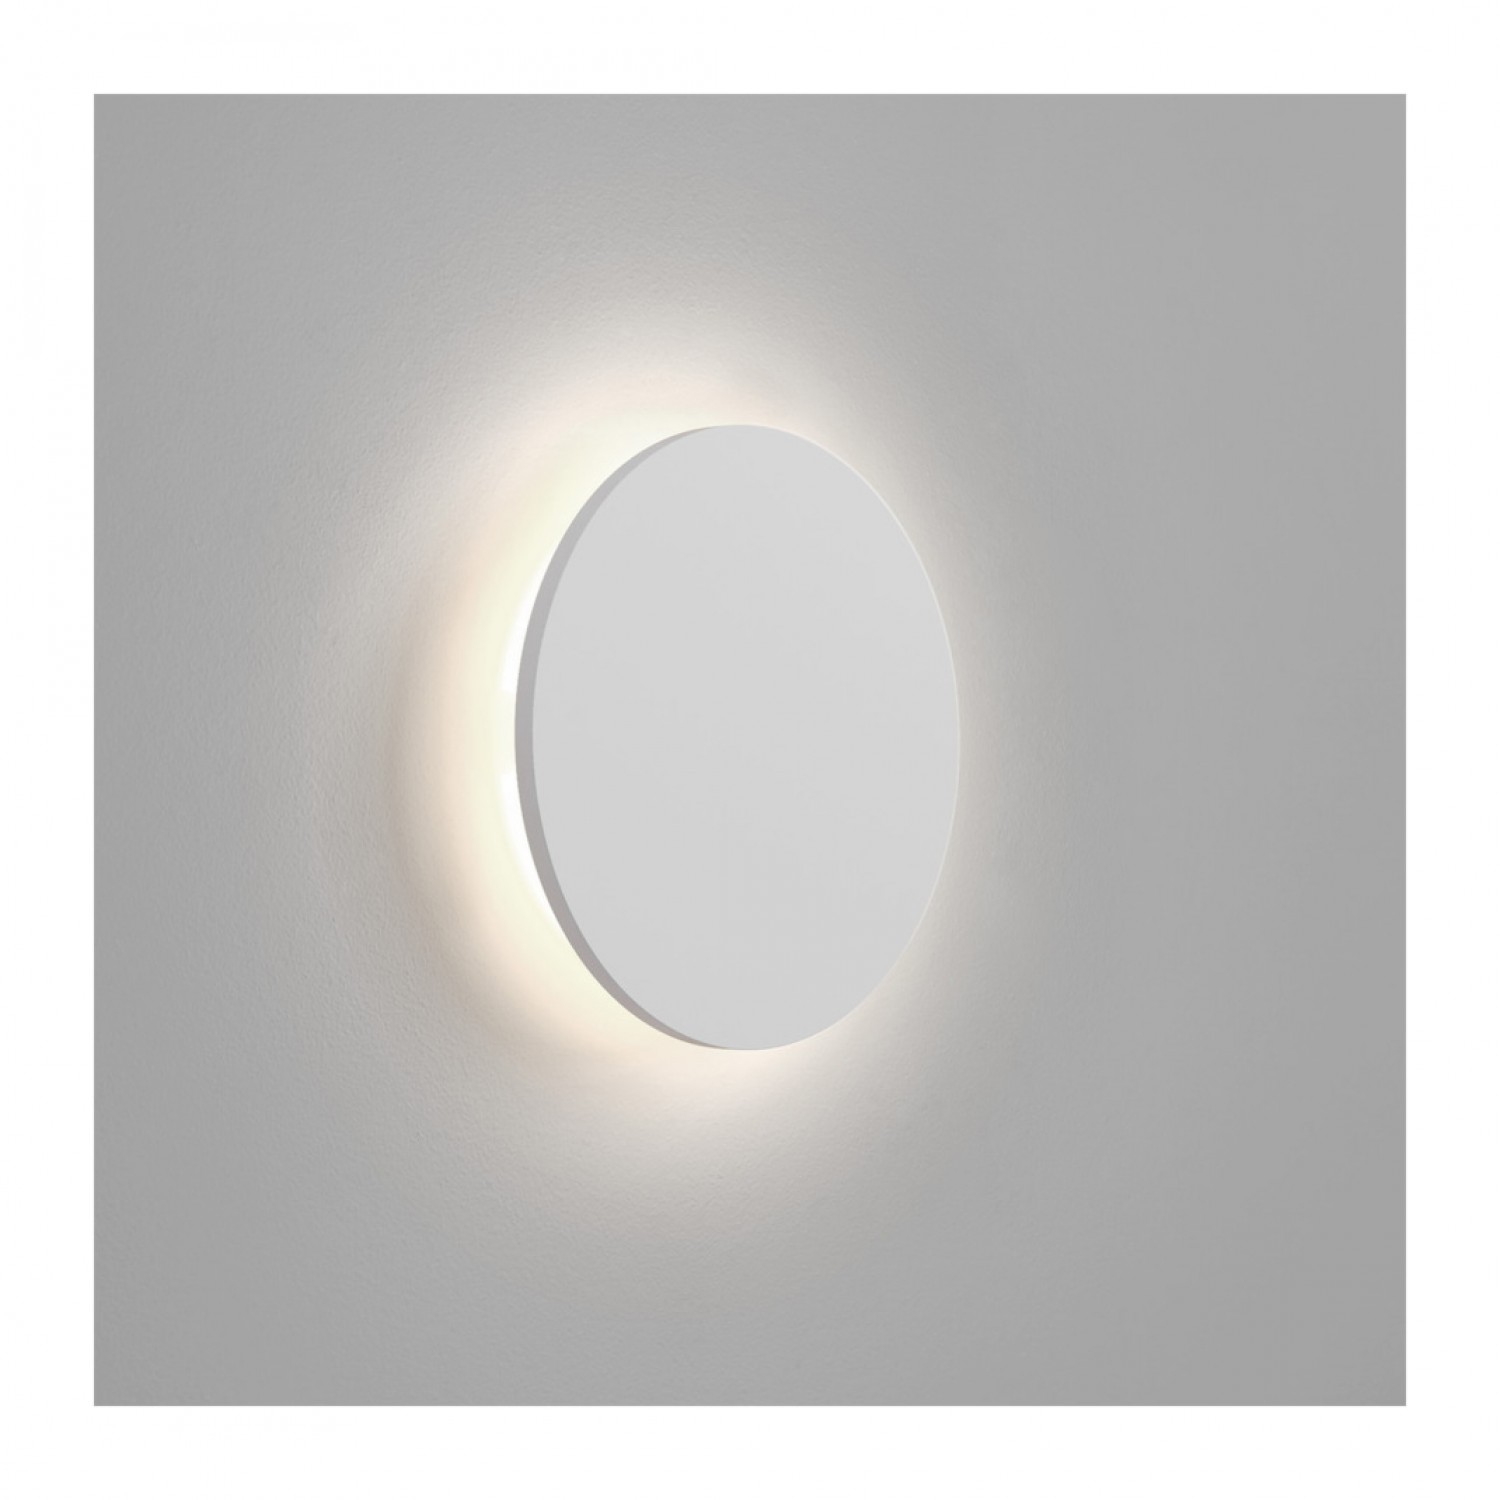 alt_image Бра Astro Eclipse Round 250 LED 3000K  1333020